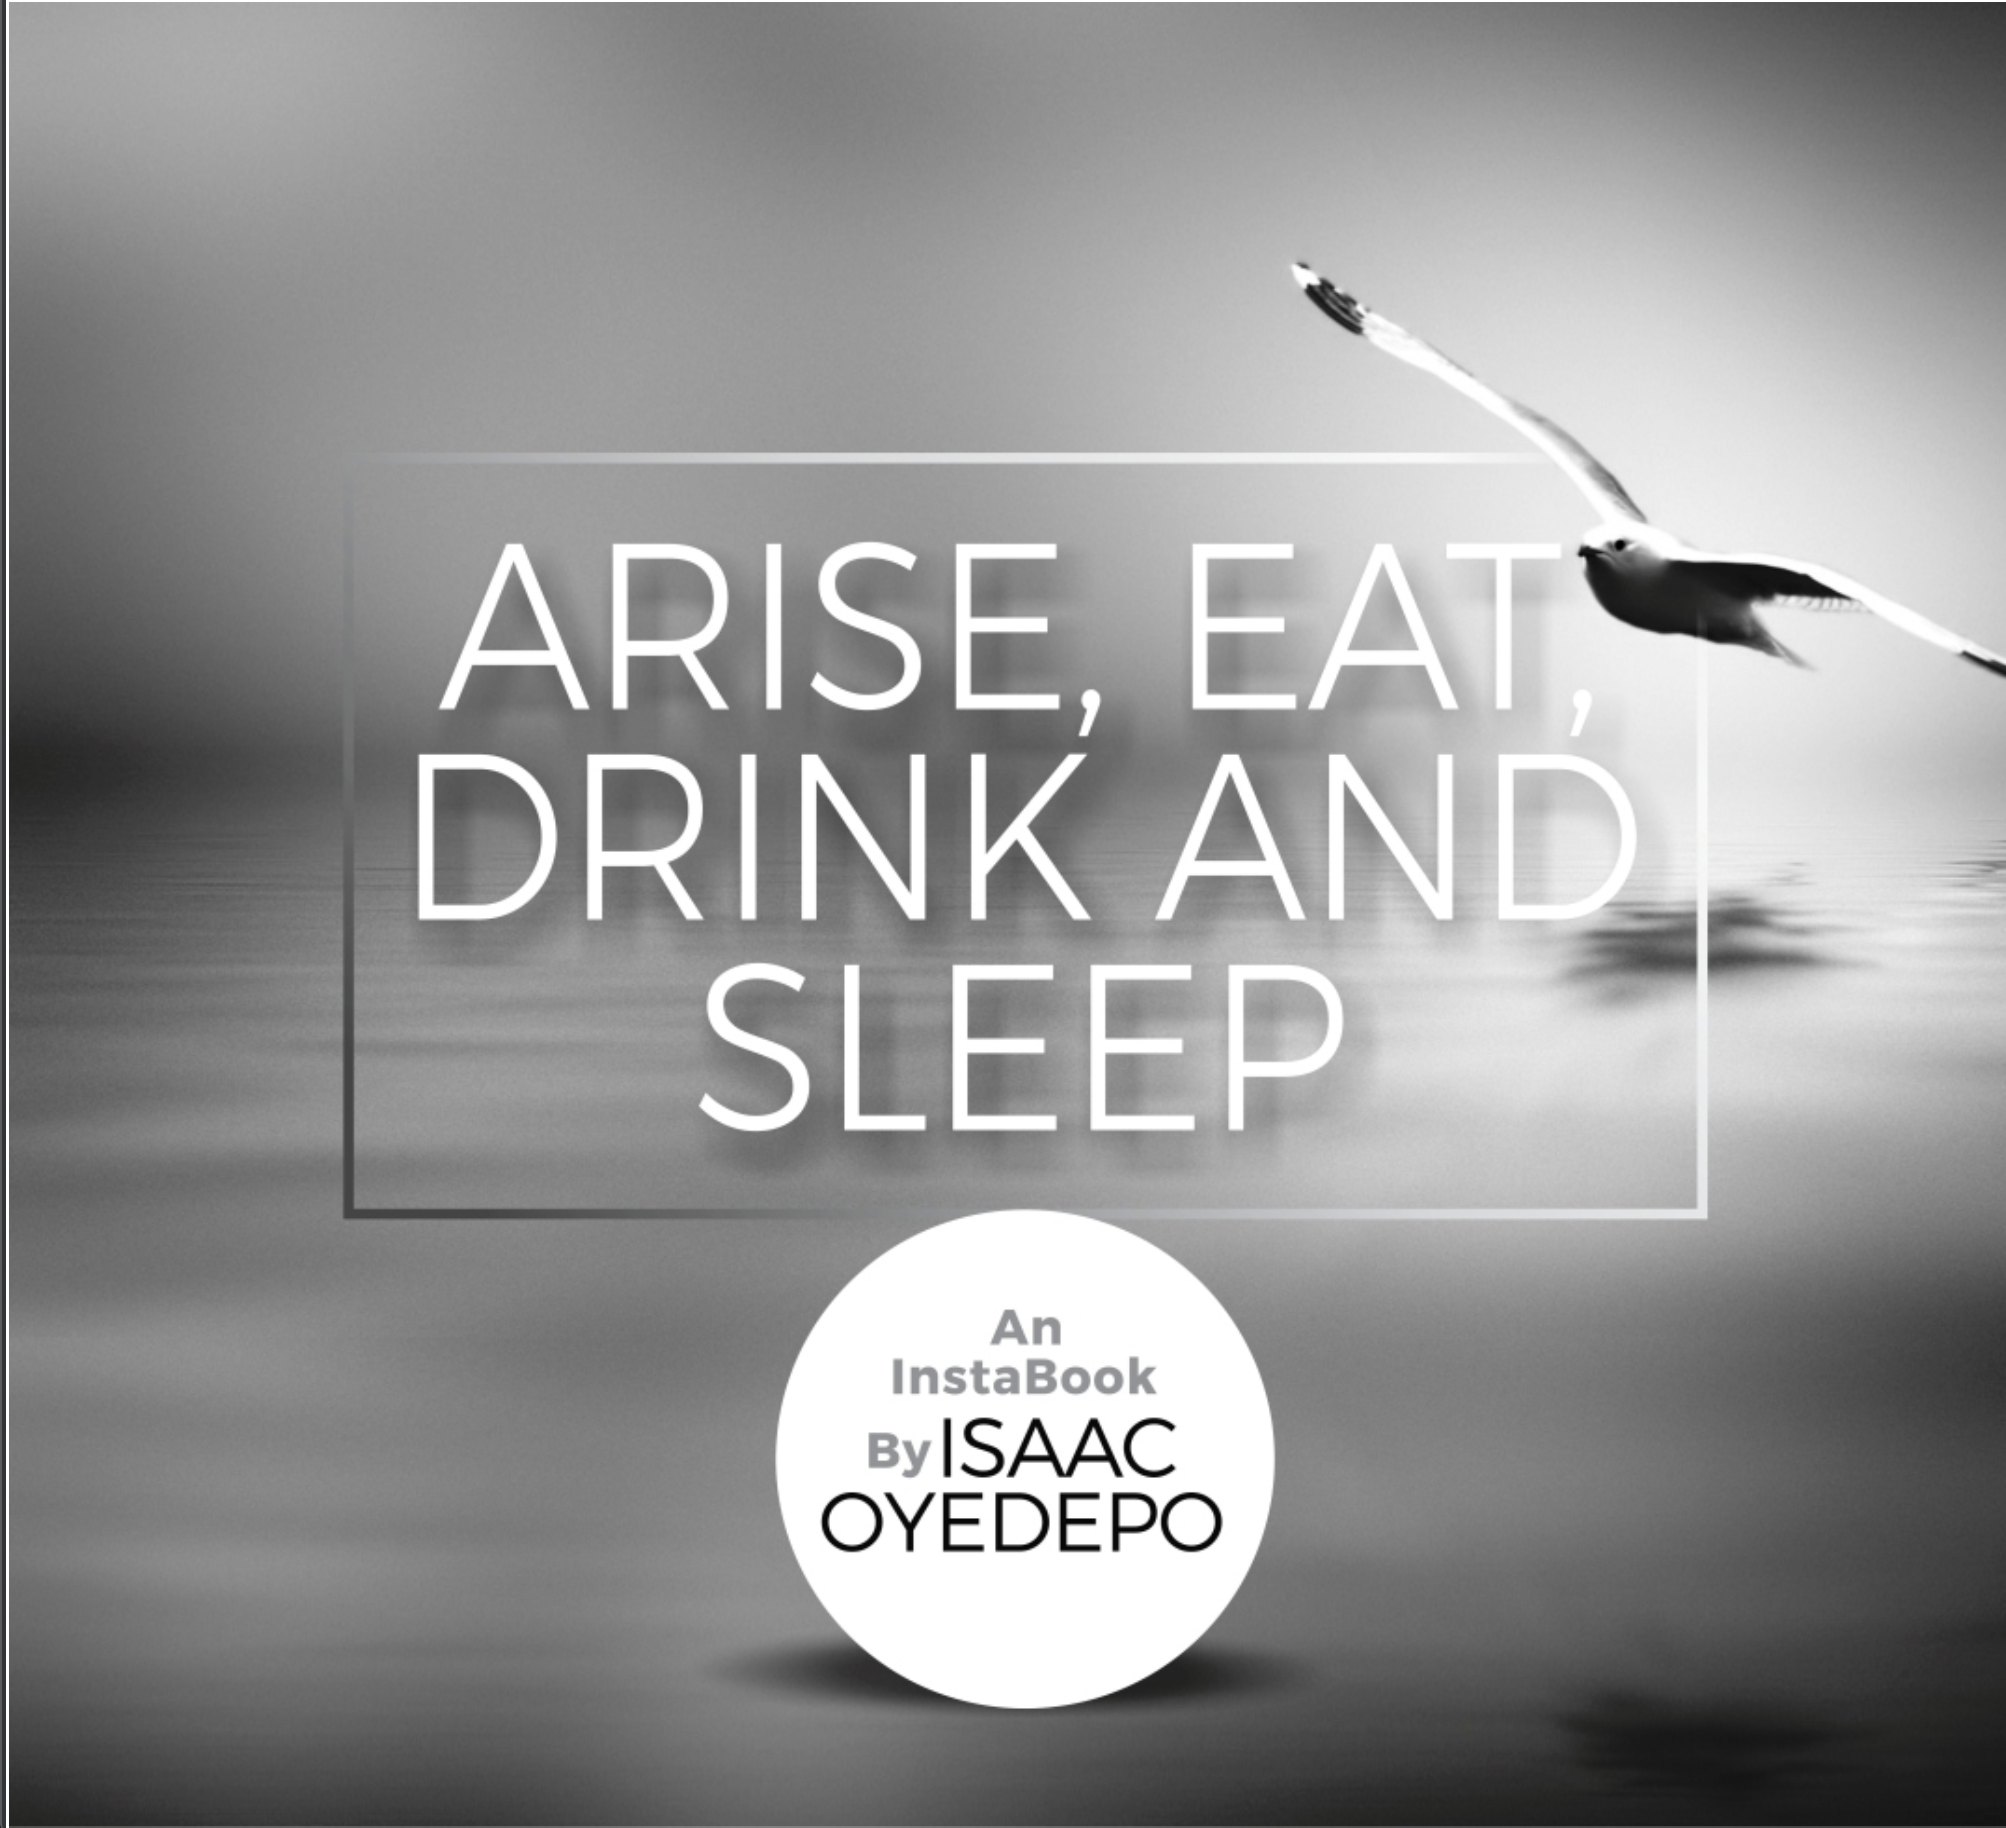 Arise eat drink and sleep